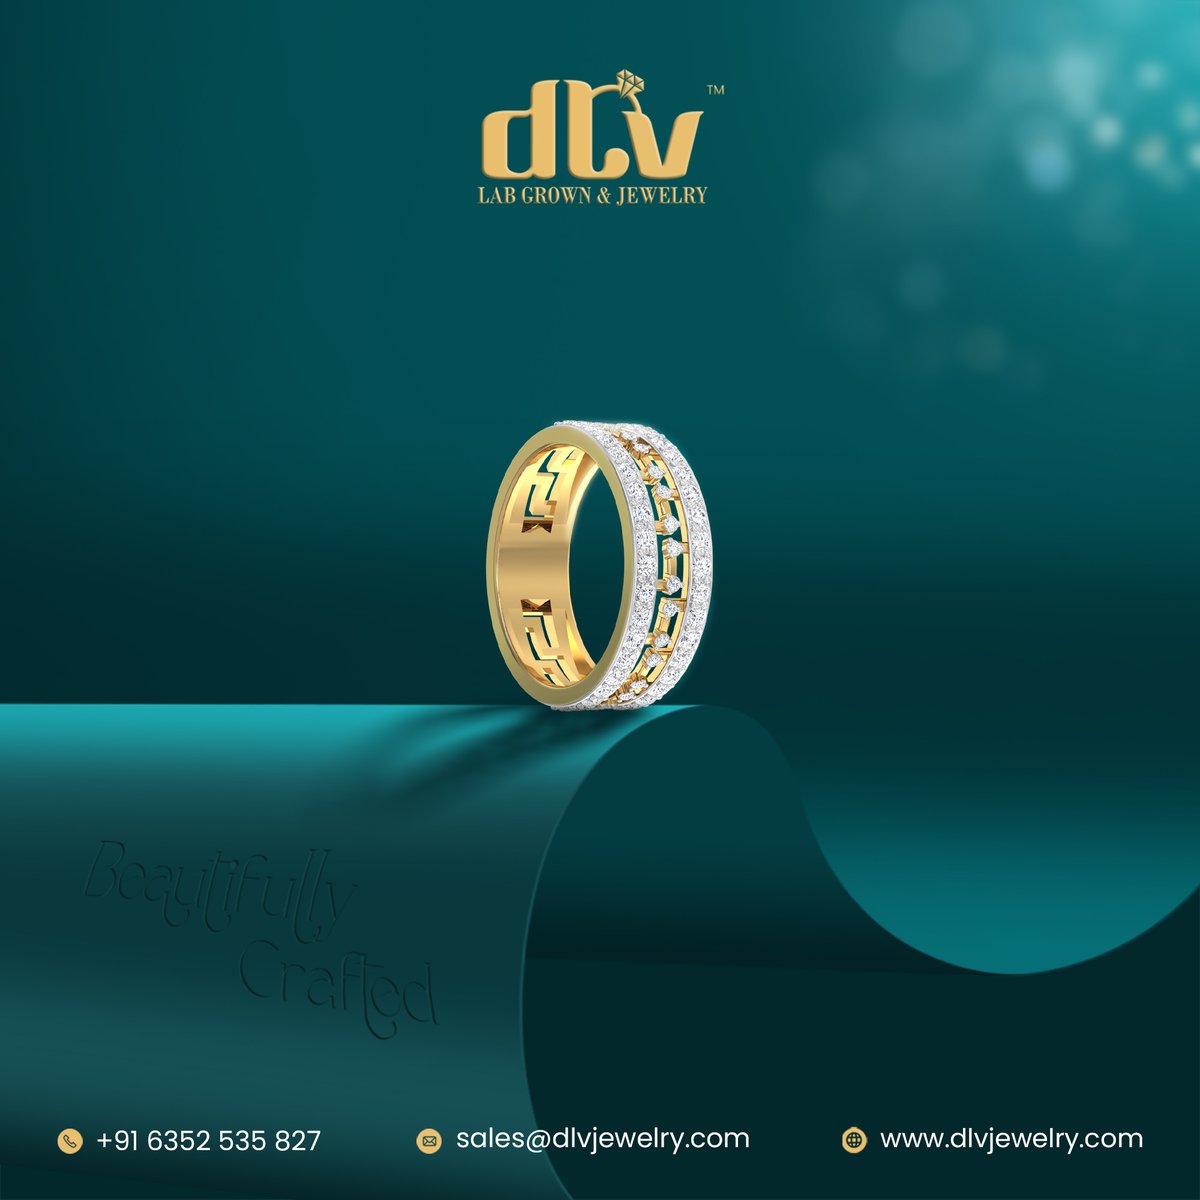 A Ring for every occasion.! 💞😍

USA 🇺🇲
Diamond 💎
Dlvjewelry 💝
Design attractive 😍
Ring ❣️
Simple 🥰
_
_

DM now !
dlvjewelry.com 🛍️
devlabtechventure.com 🎁

#dlvdiamondusa #ring #usajewelry #ringart #specialperson #gift #engaged #love #forever #designerofusa